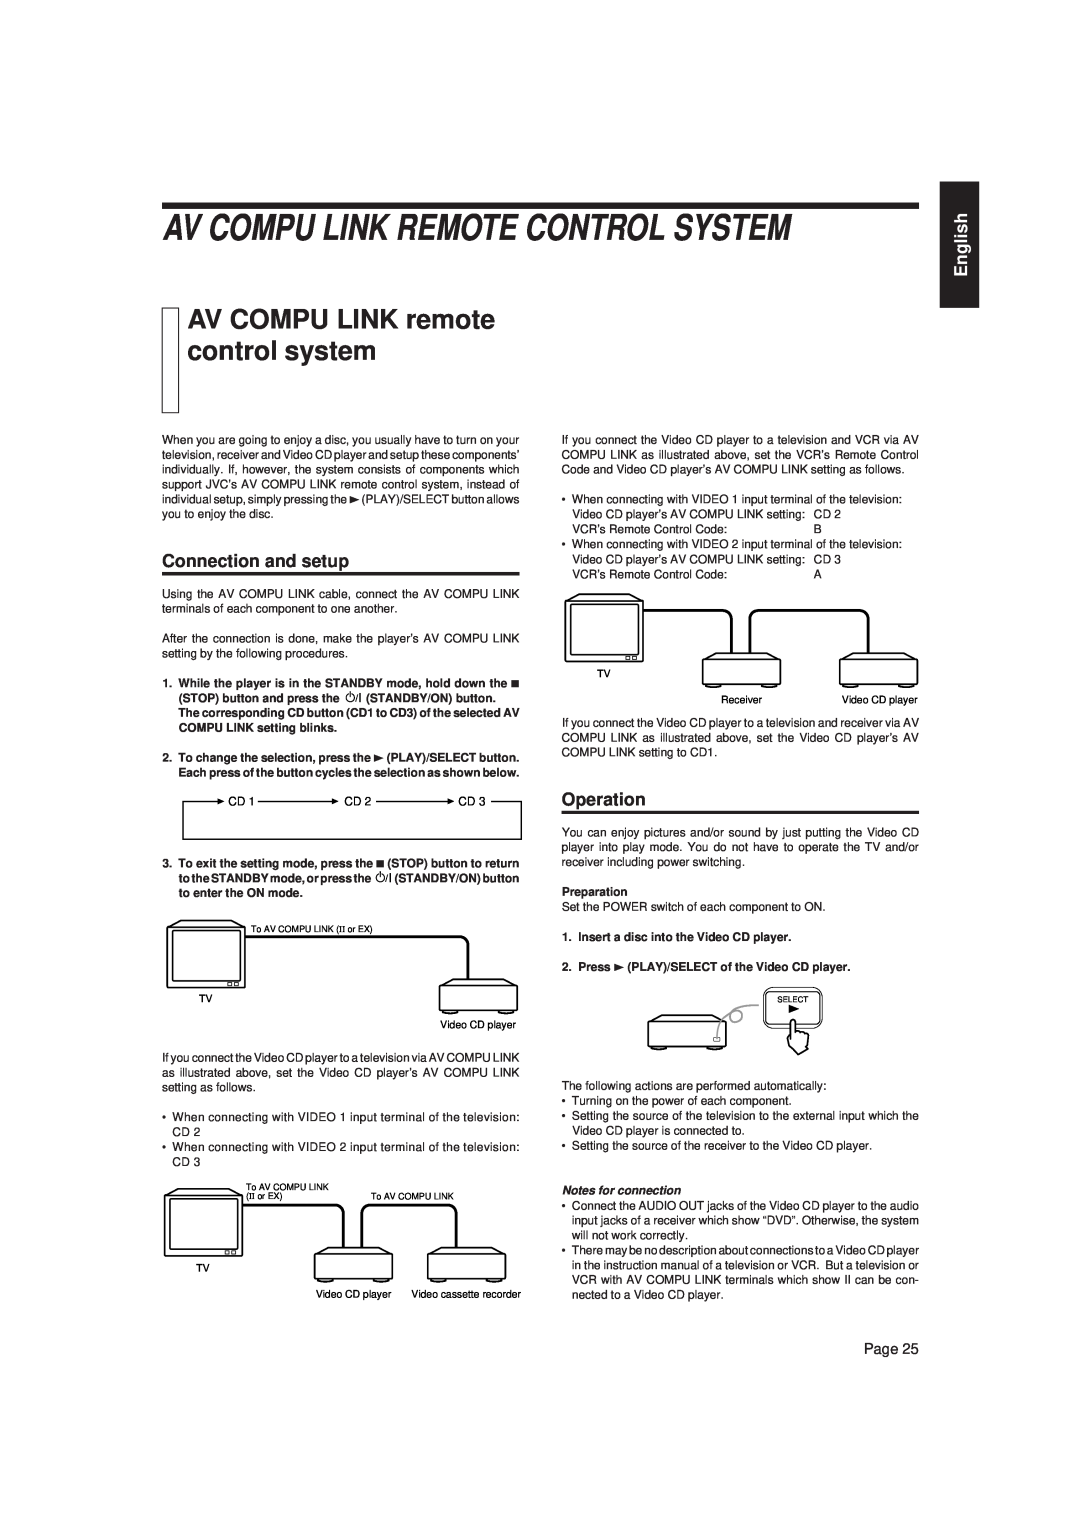 JVC XL-MV7000GD Av Compu Link Remote Control System, AV COMPU LINK remote control system, Connection and setup, Operation 